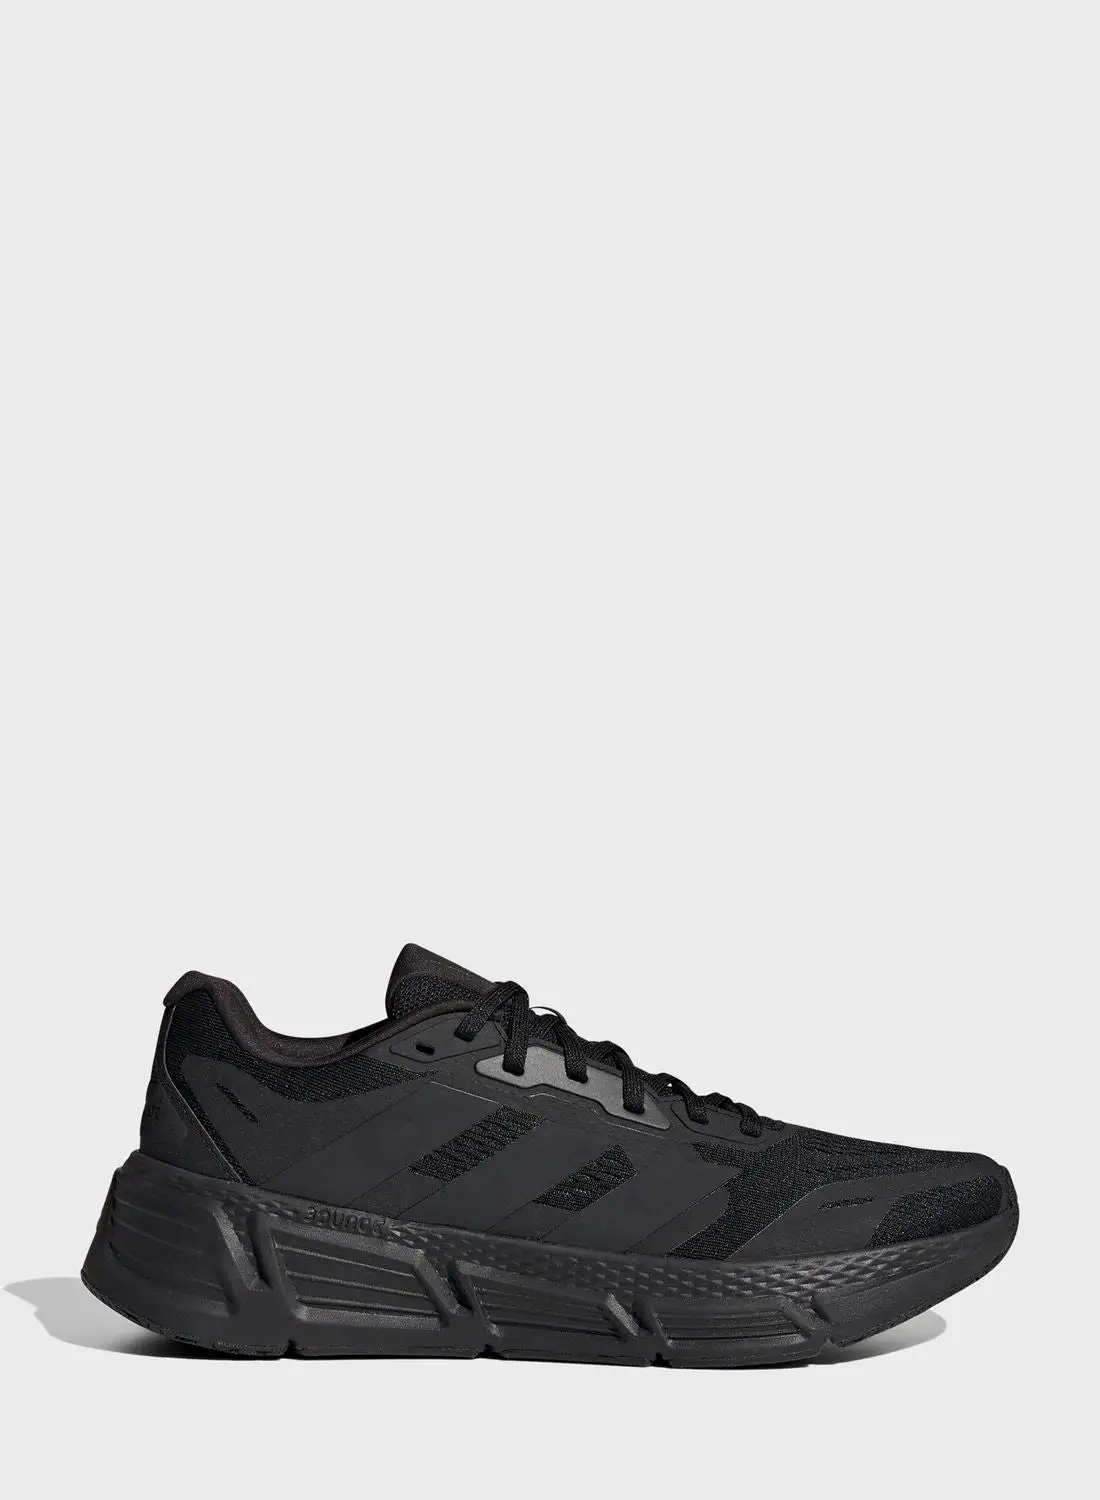 Adidas Questar 2 Shoes